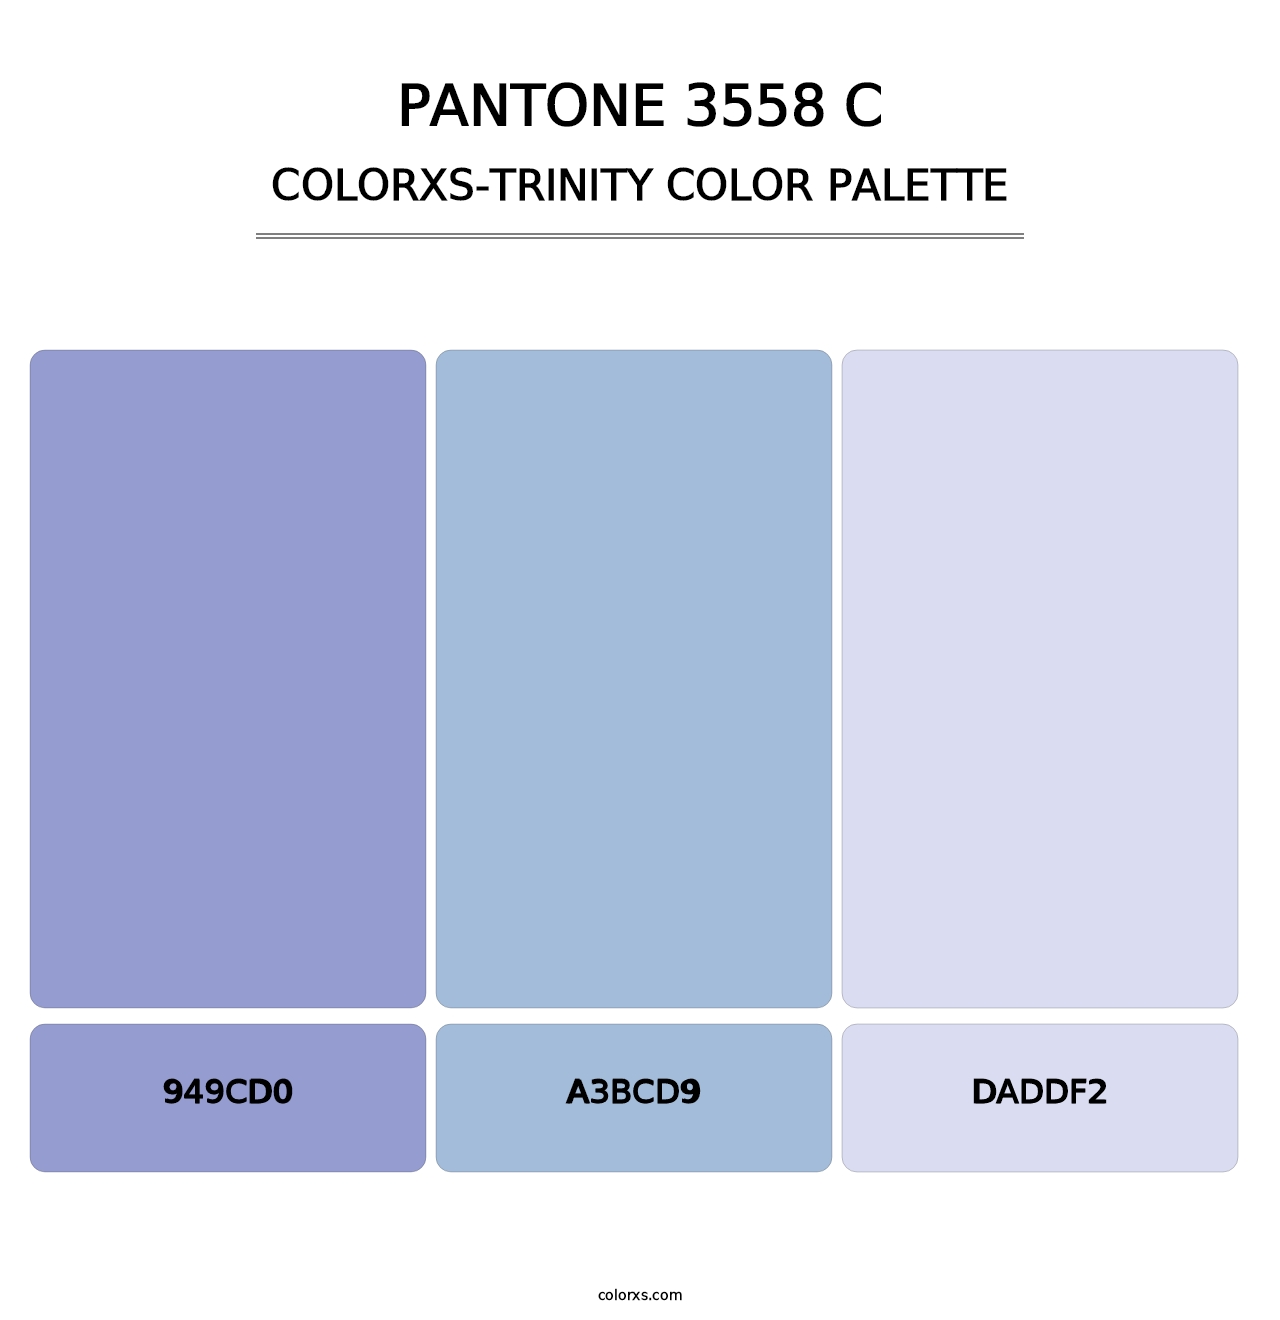 PANTONE 3558 C - Colorxs Trinity Palette